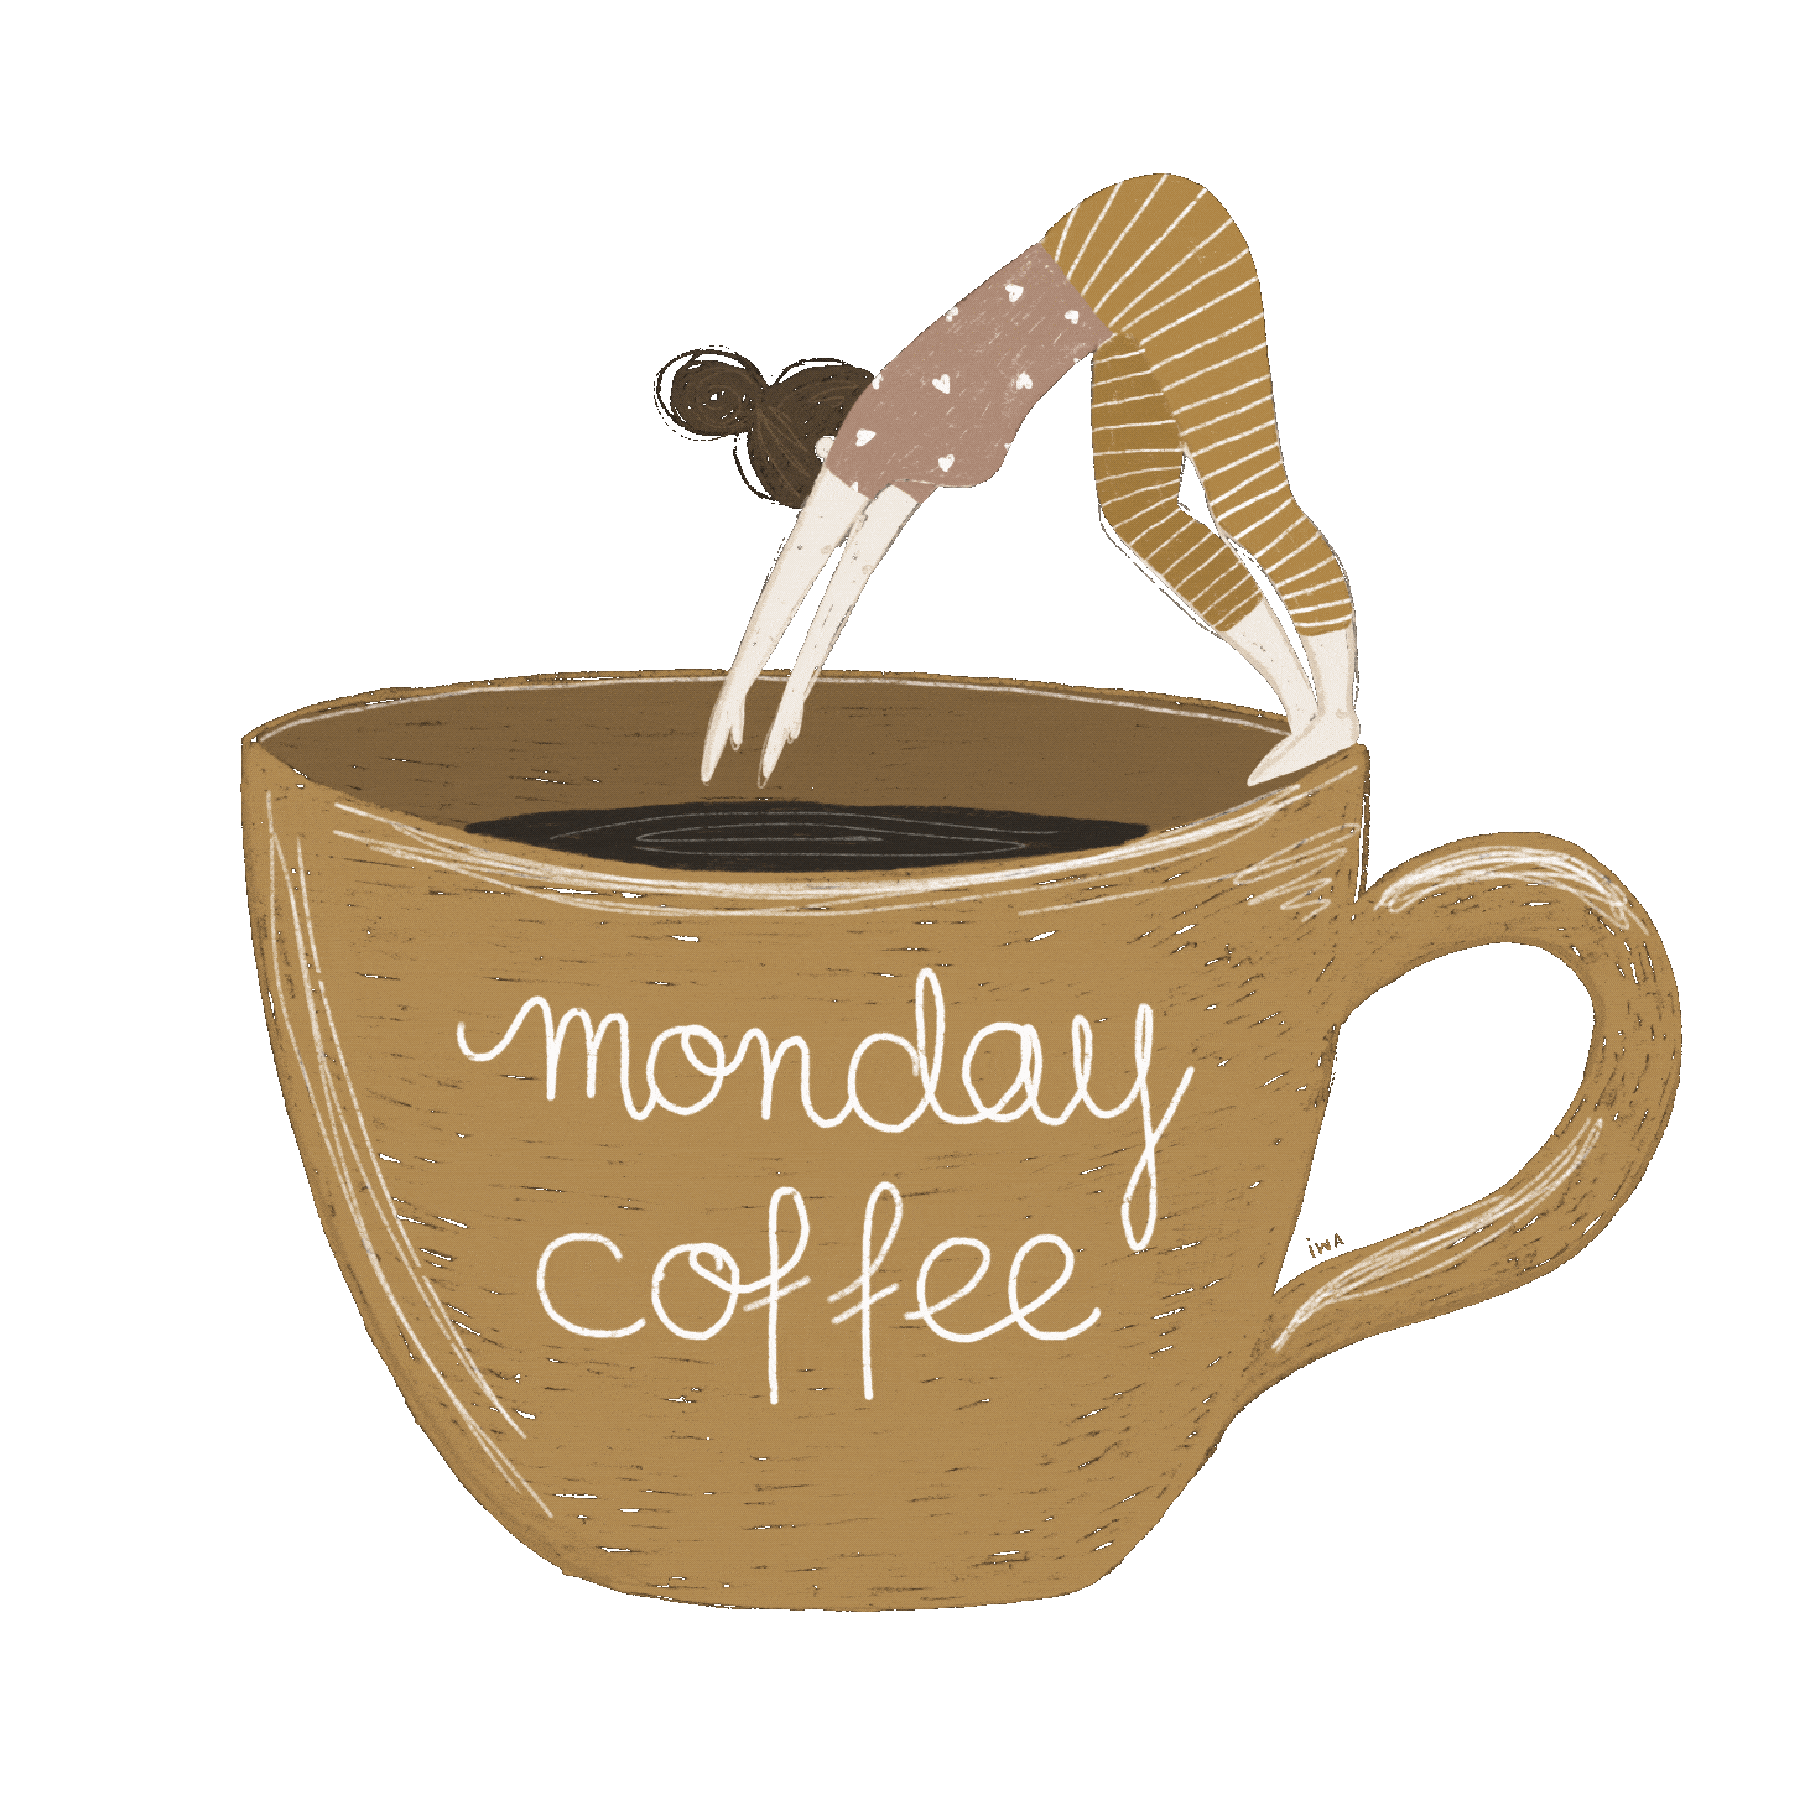 Monday Coffee Gif - GIFcen